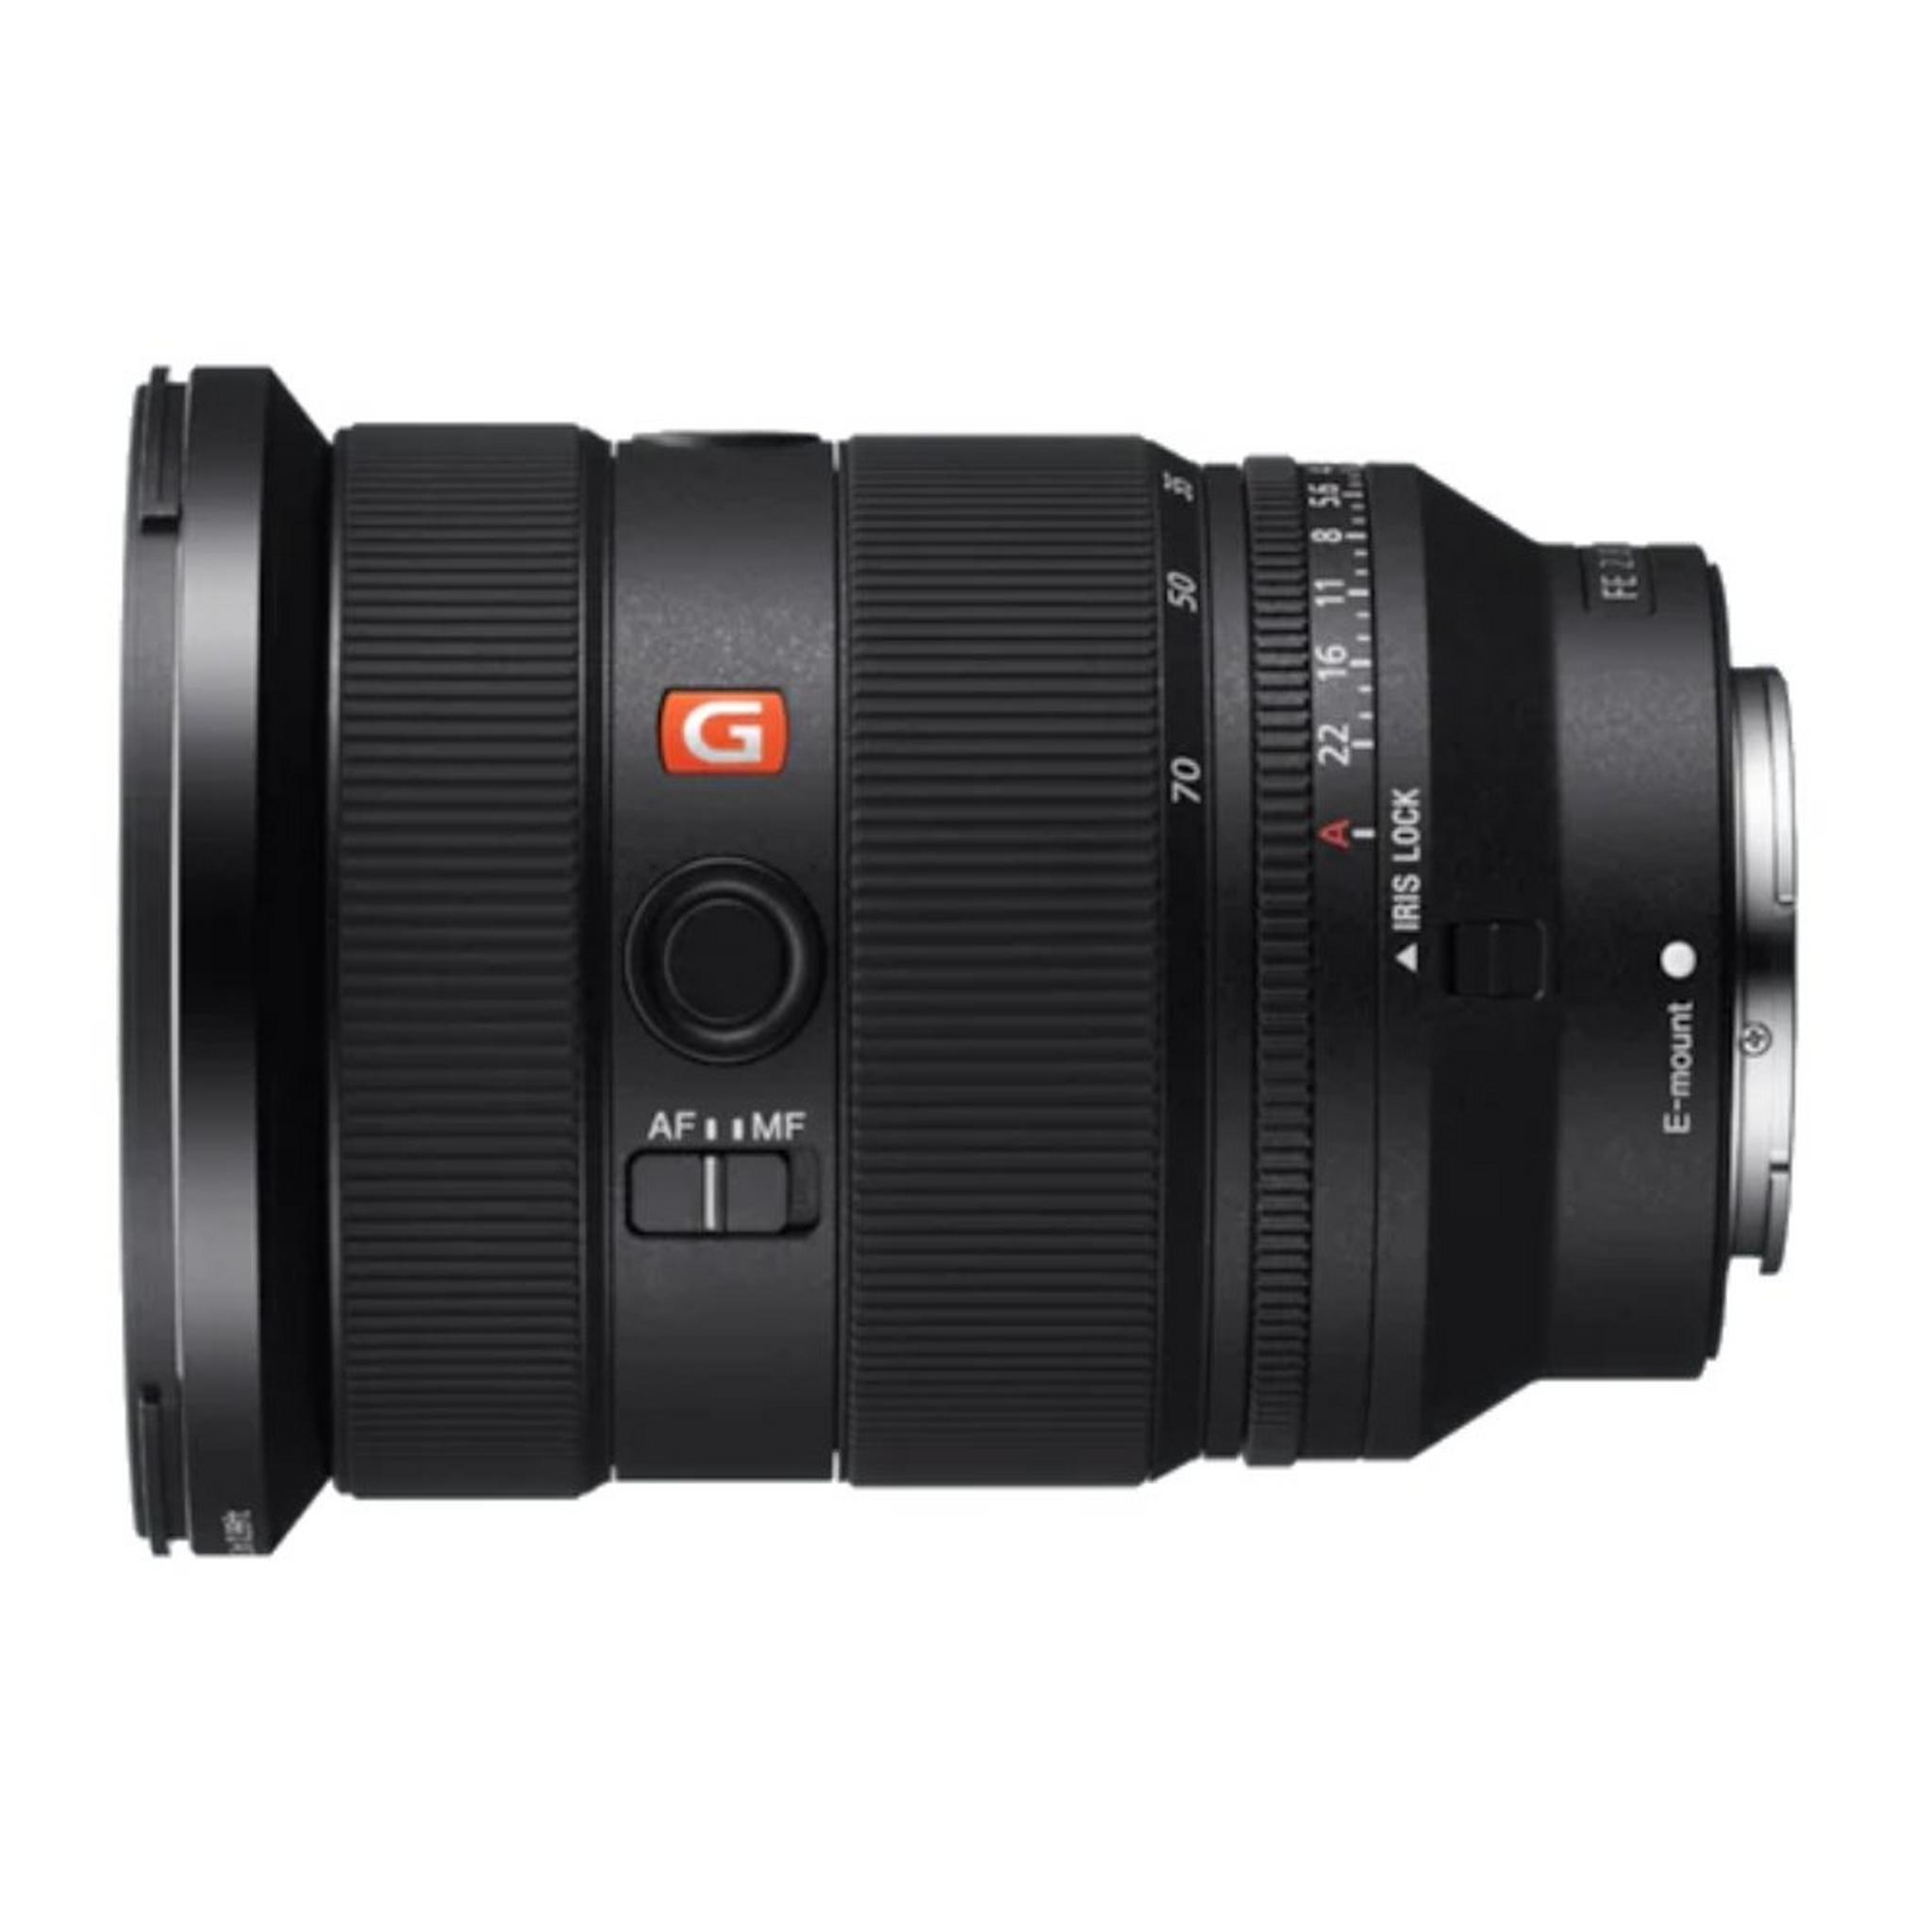 Sony FE 24-70mm F2.8 GM II Premium G Master standard zoom lens.